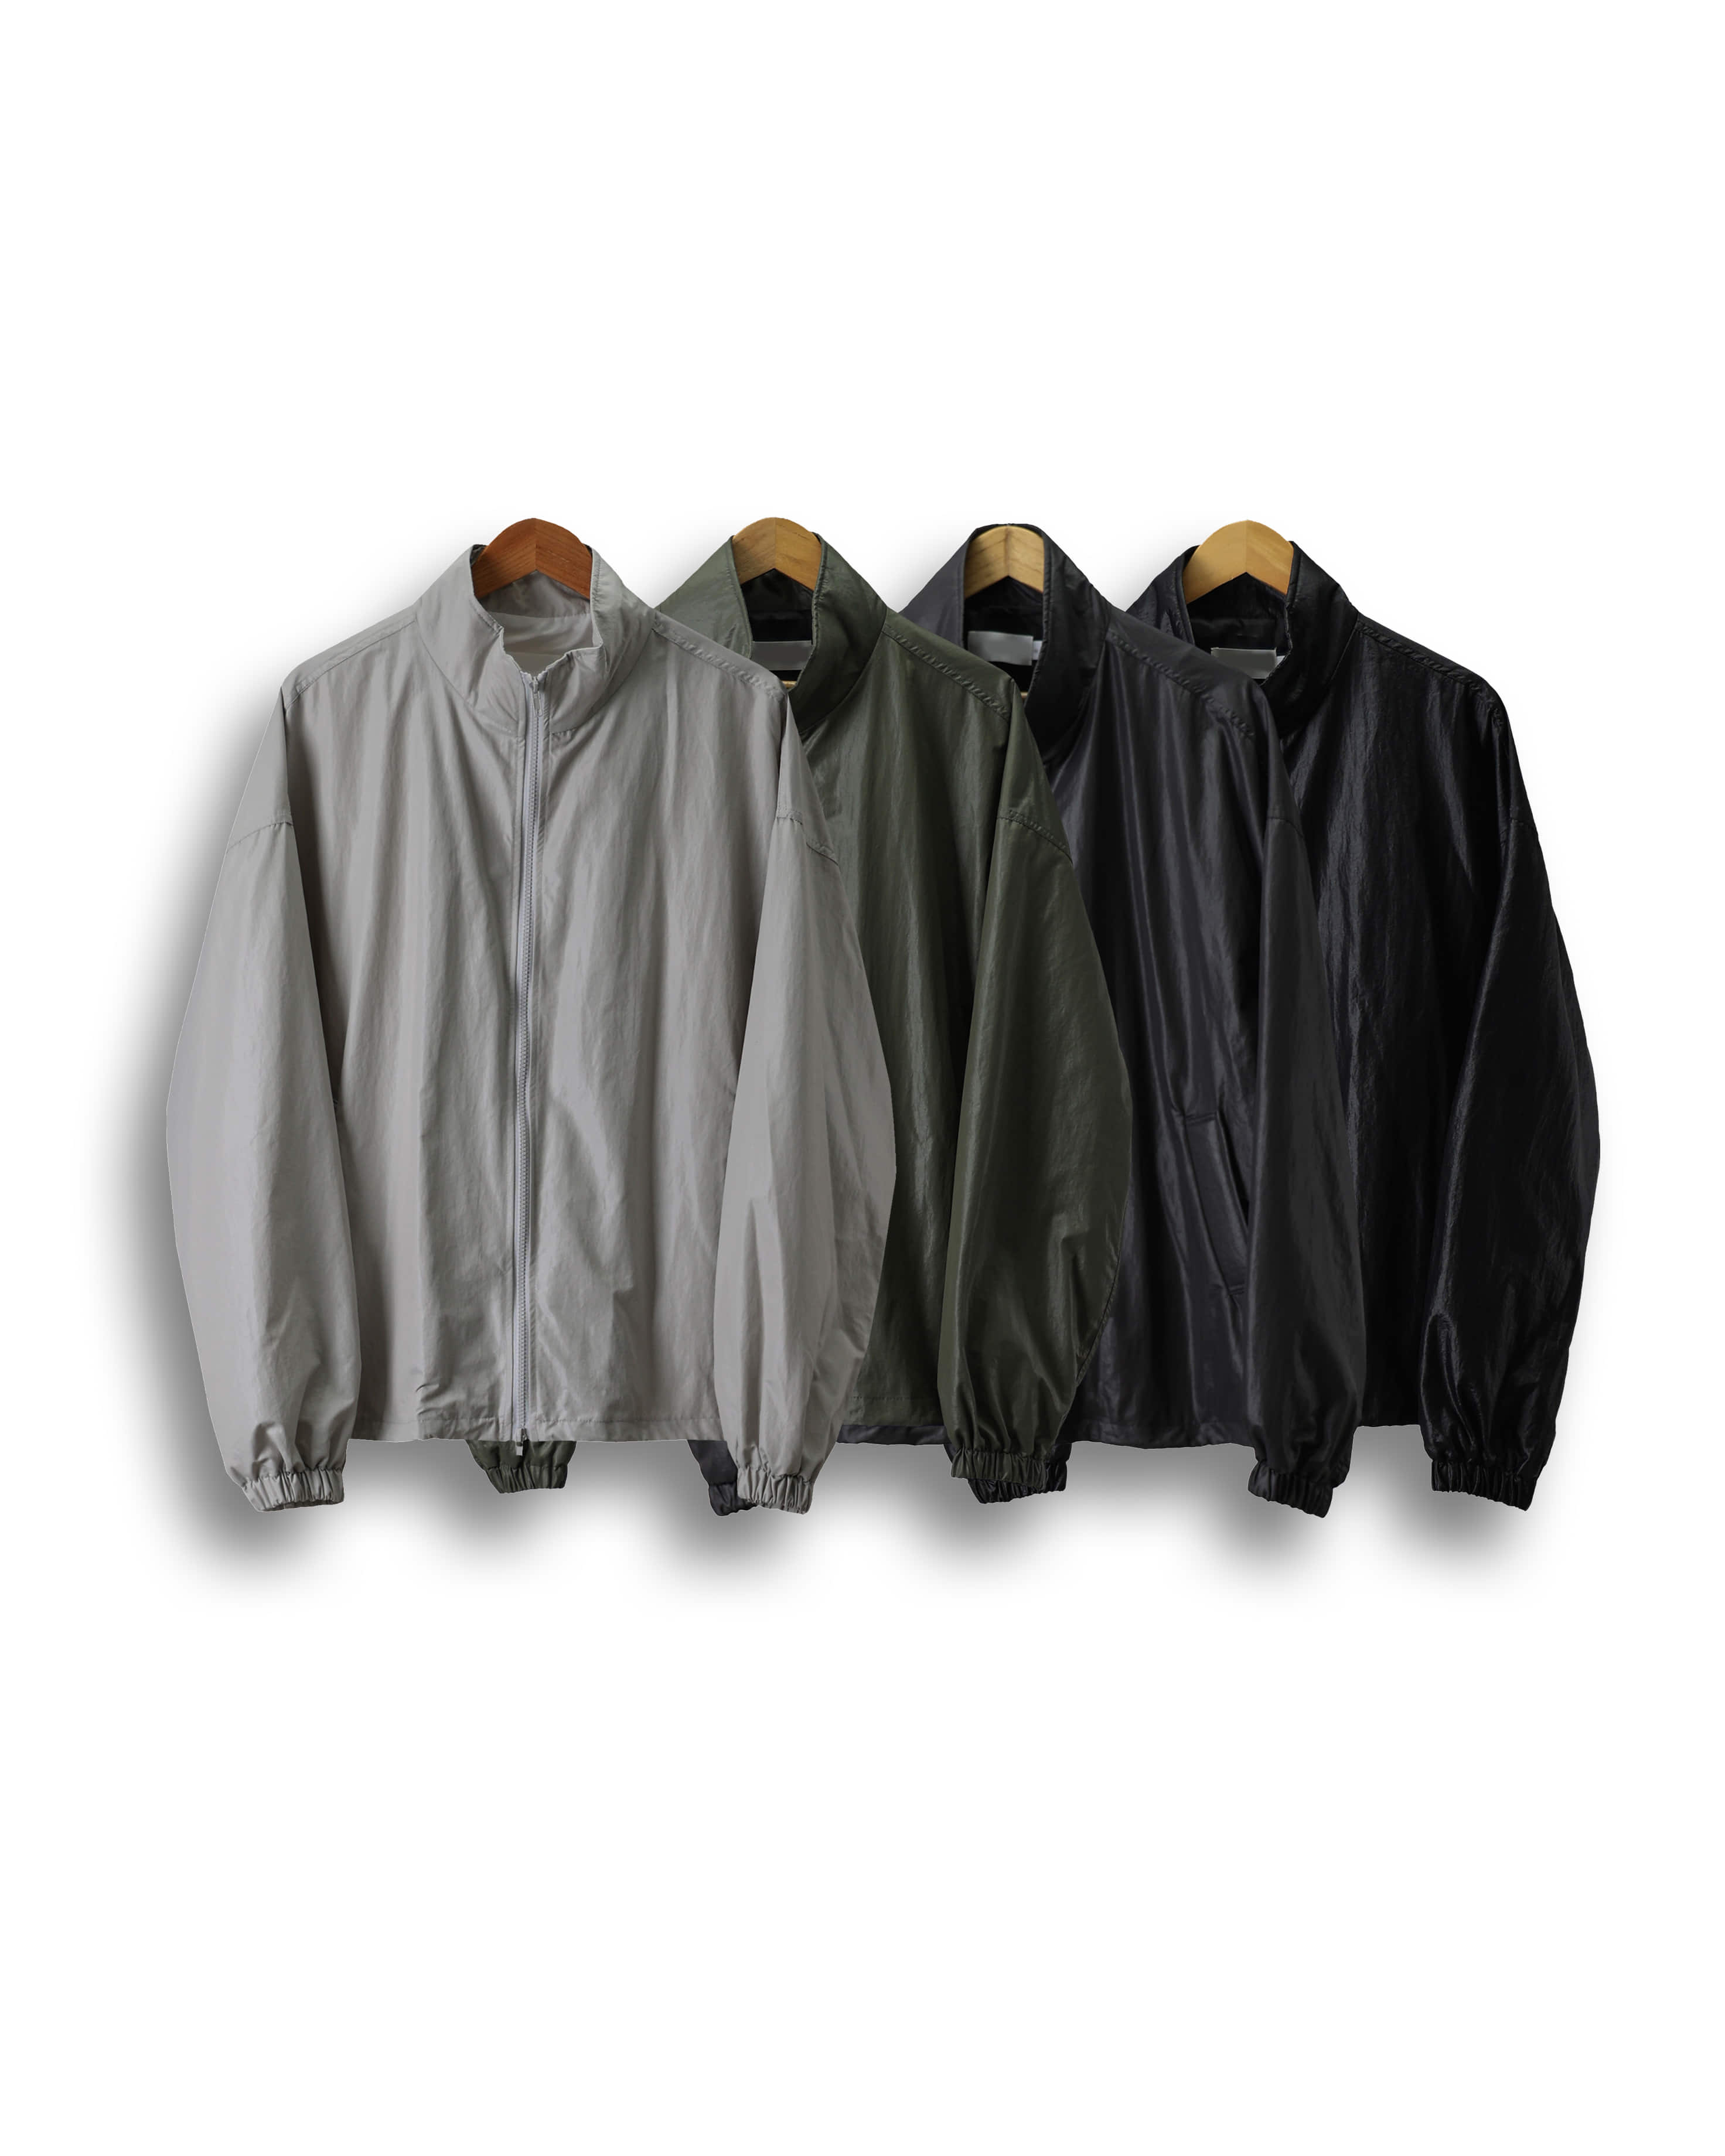 TIPS Glossy Crop Picnic Wind Jacket (Black/Charcoal/Khaki/Gray)